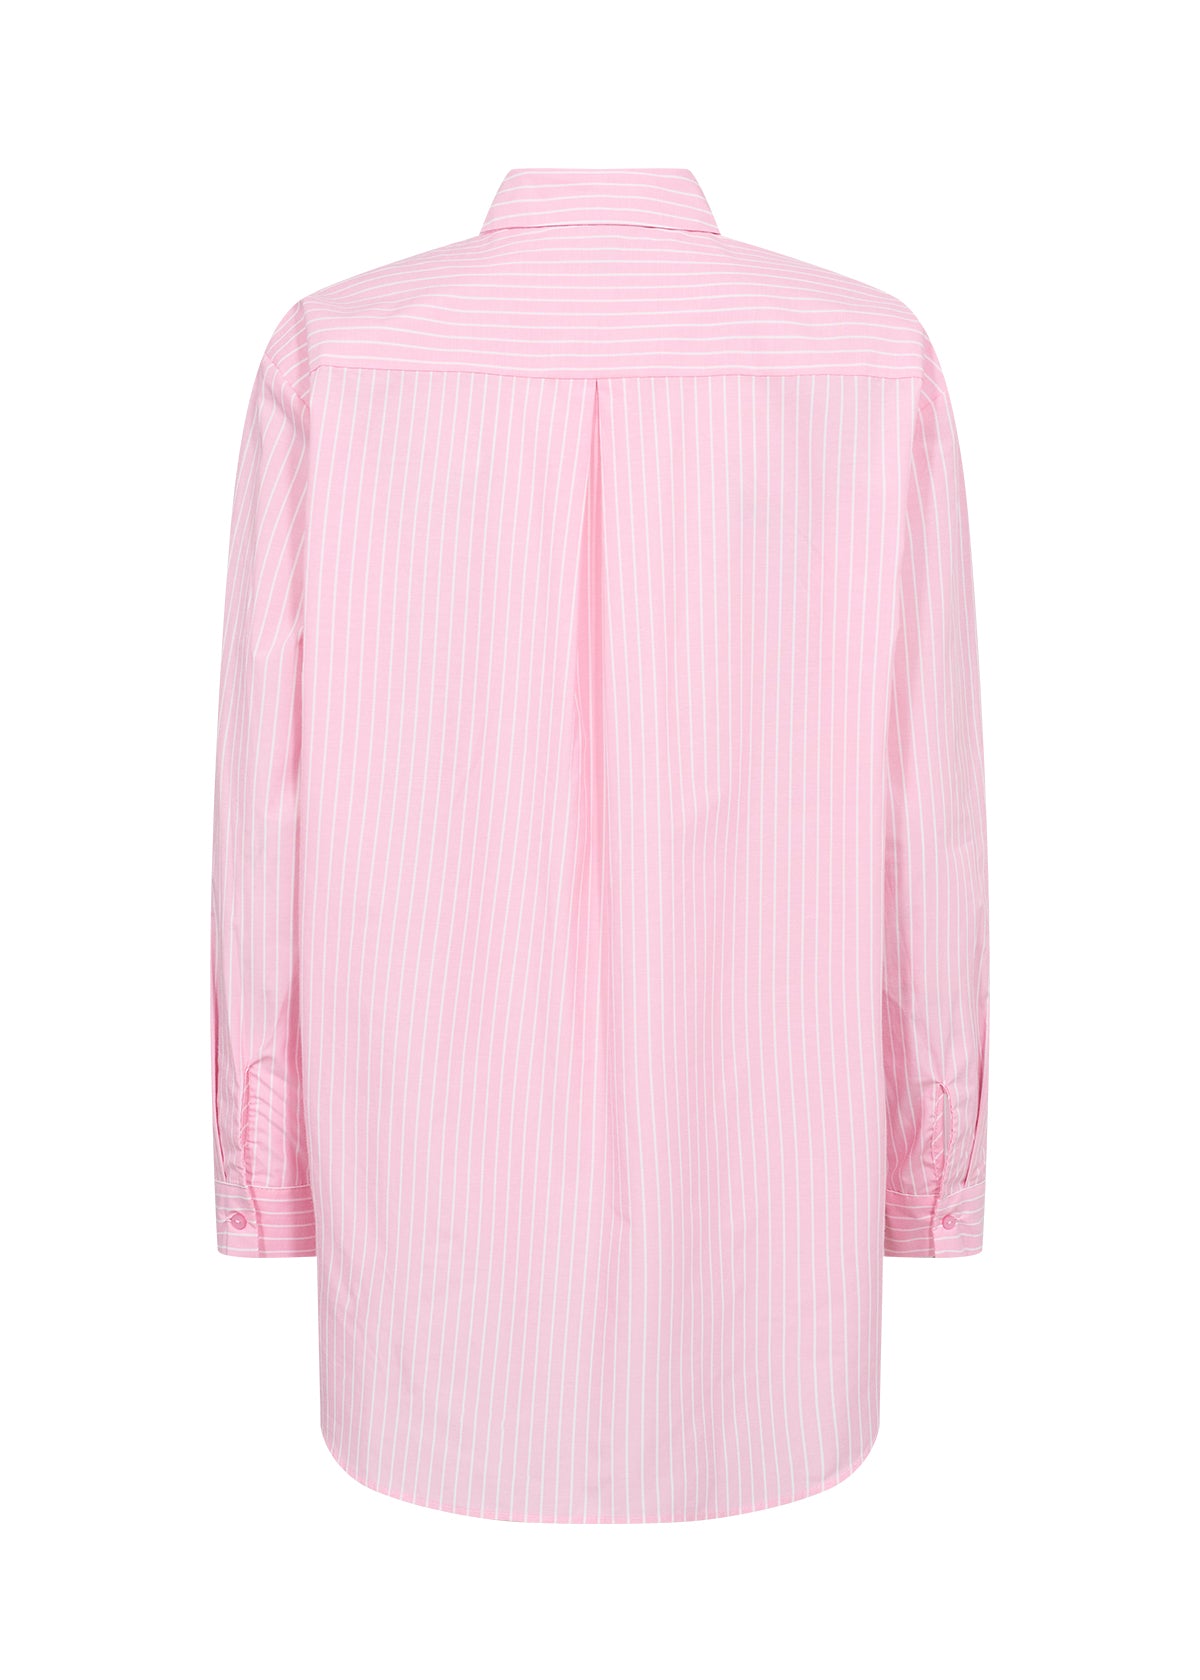 DICLE Shirt ~ Pink Stripe